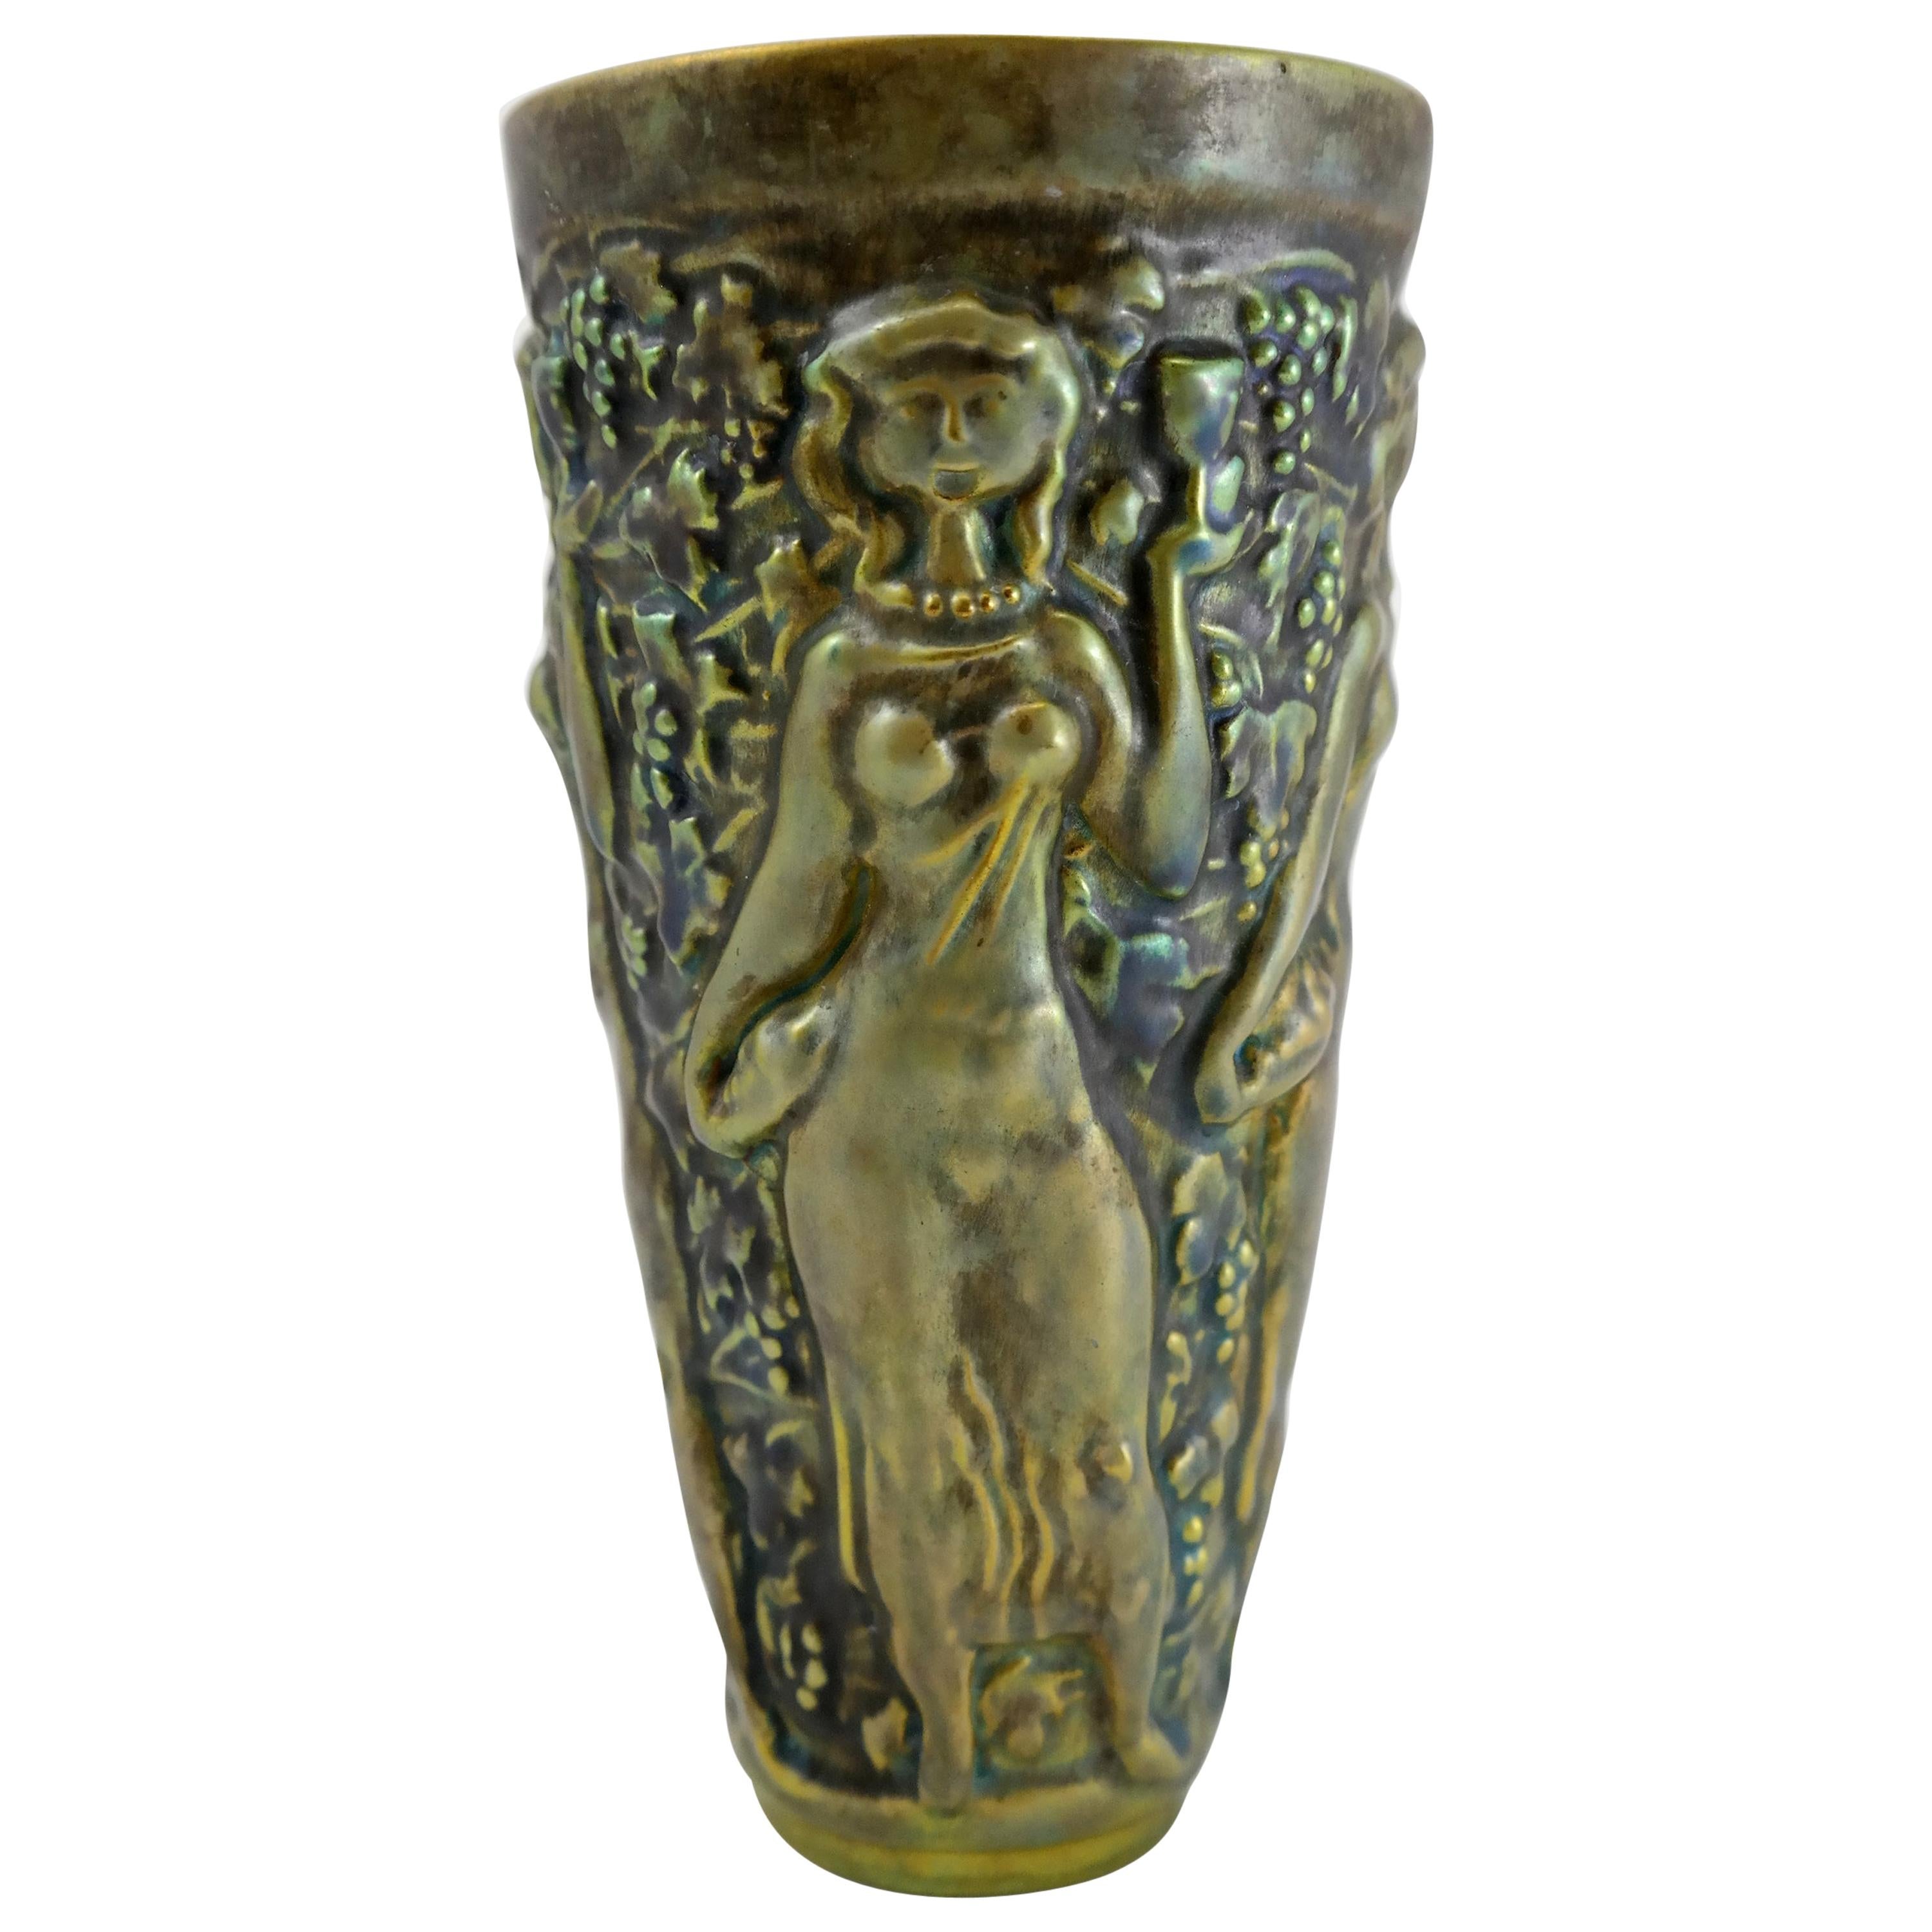 Art Nouveau Iridescent Eosin Glazed Ceramic Vase by Zsolnay, 1910s